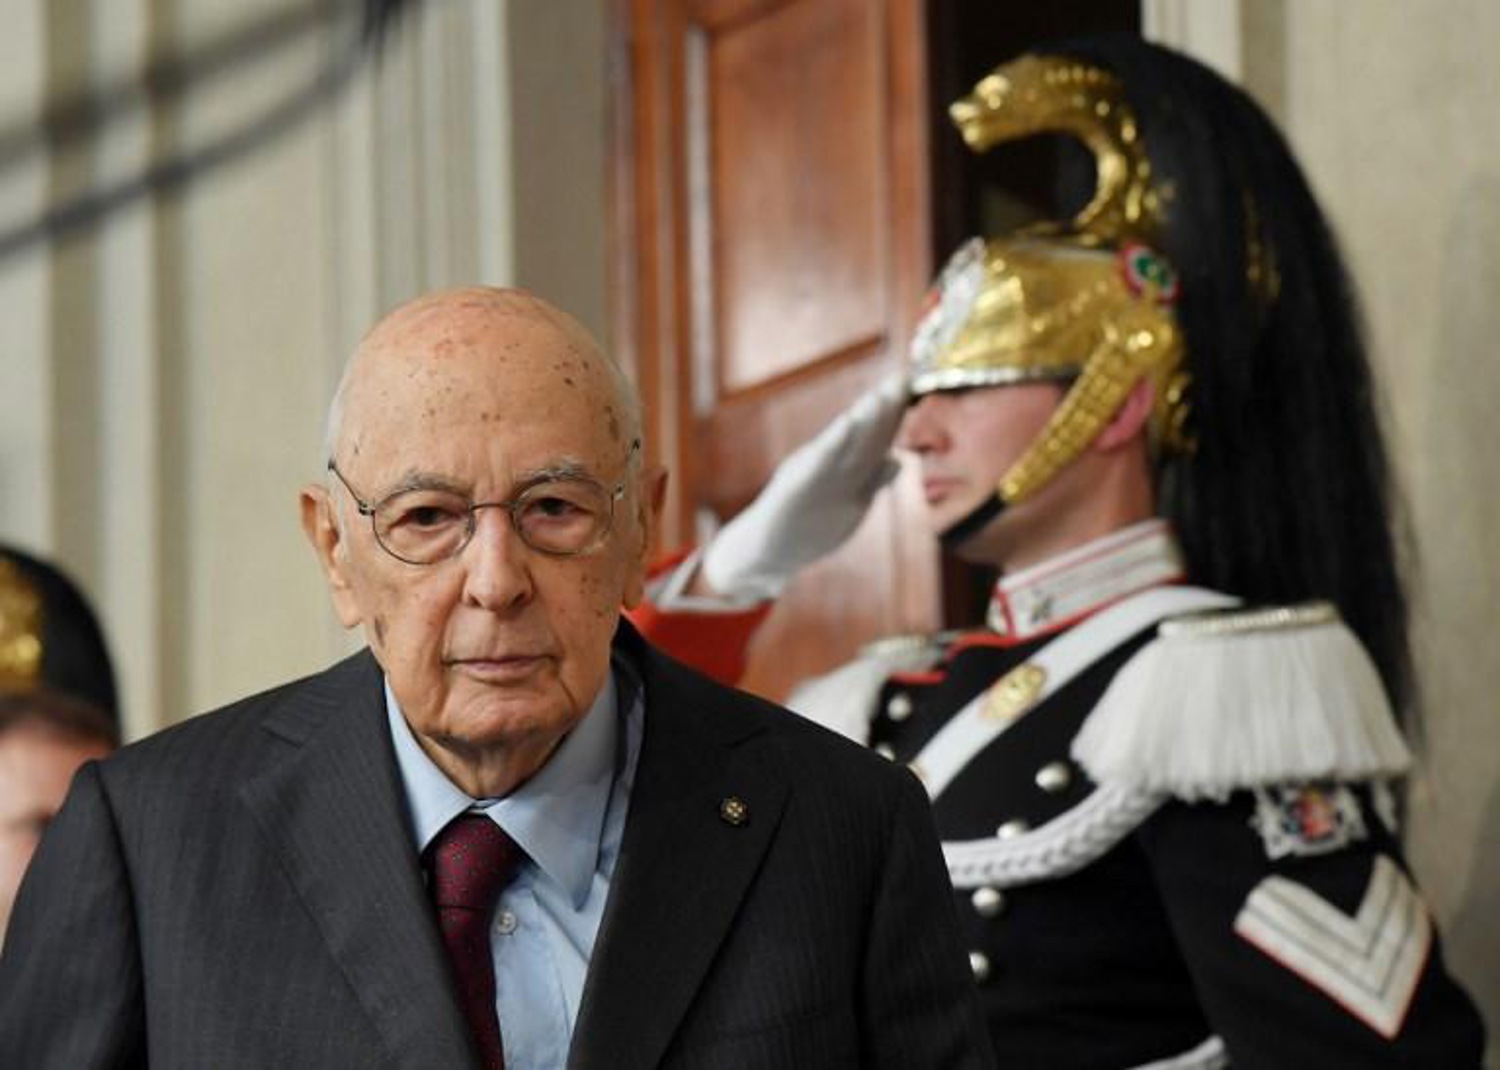 Former Italian President Giorgio Napolitano has died